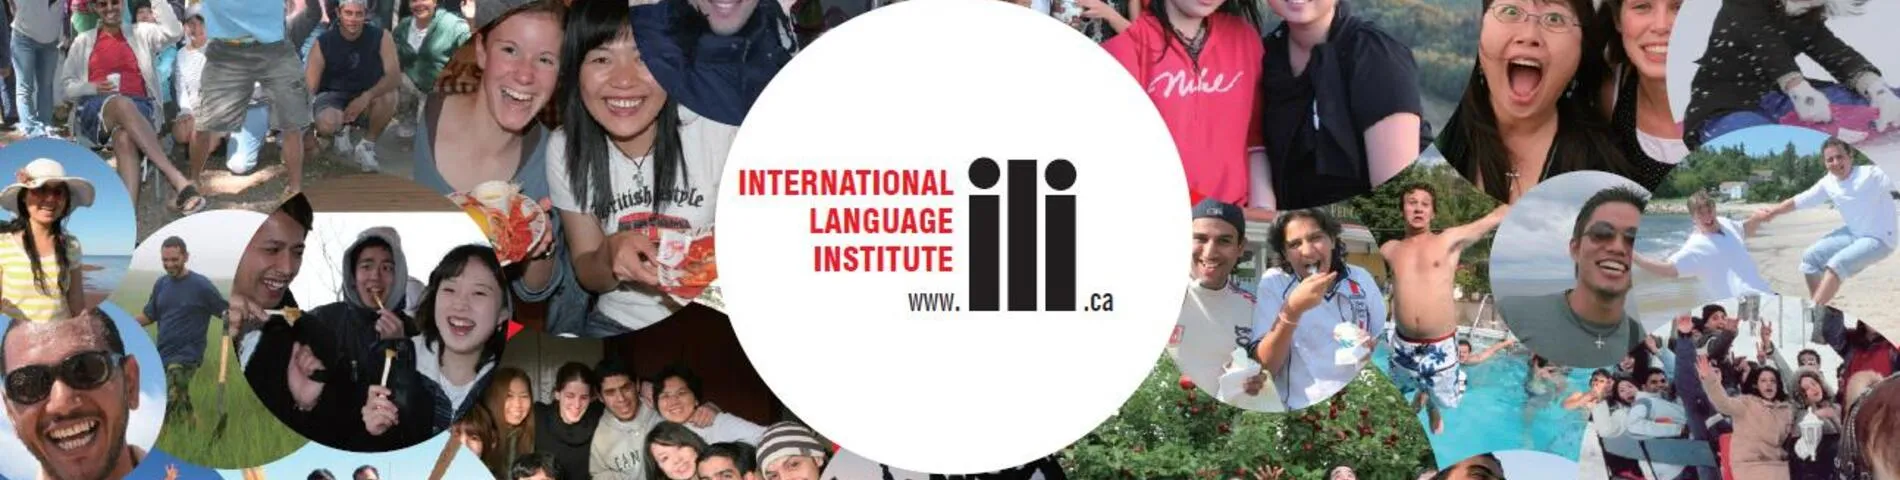 ILI - International Language Institute billede 1